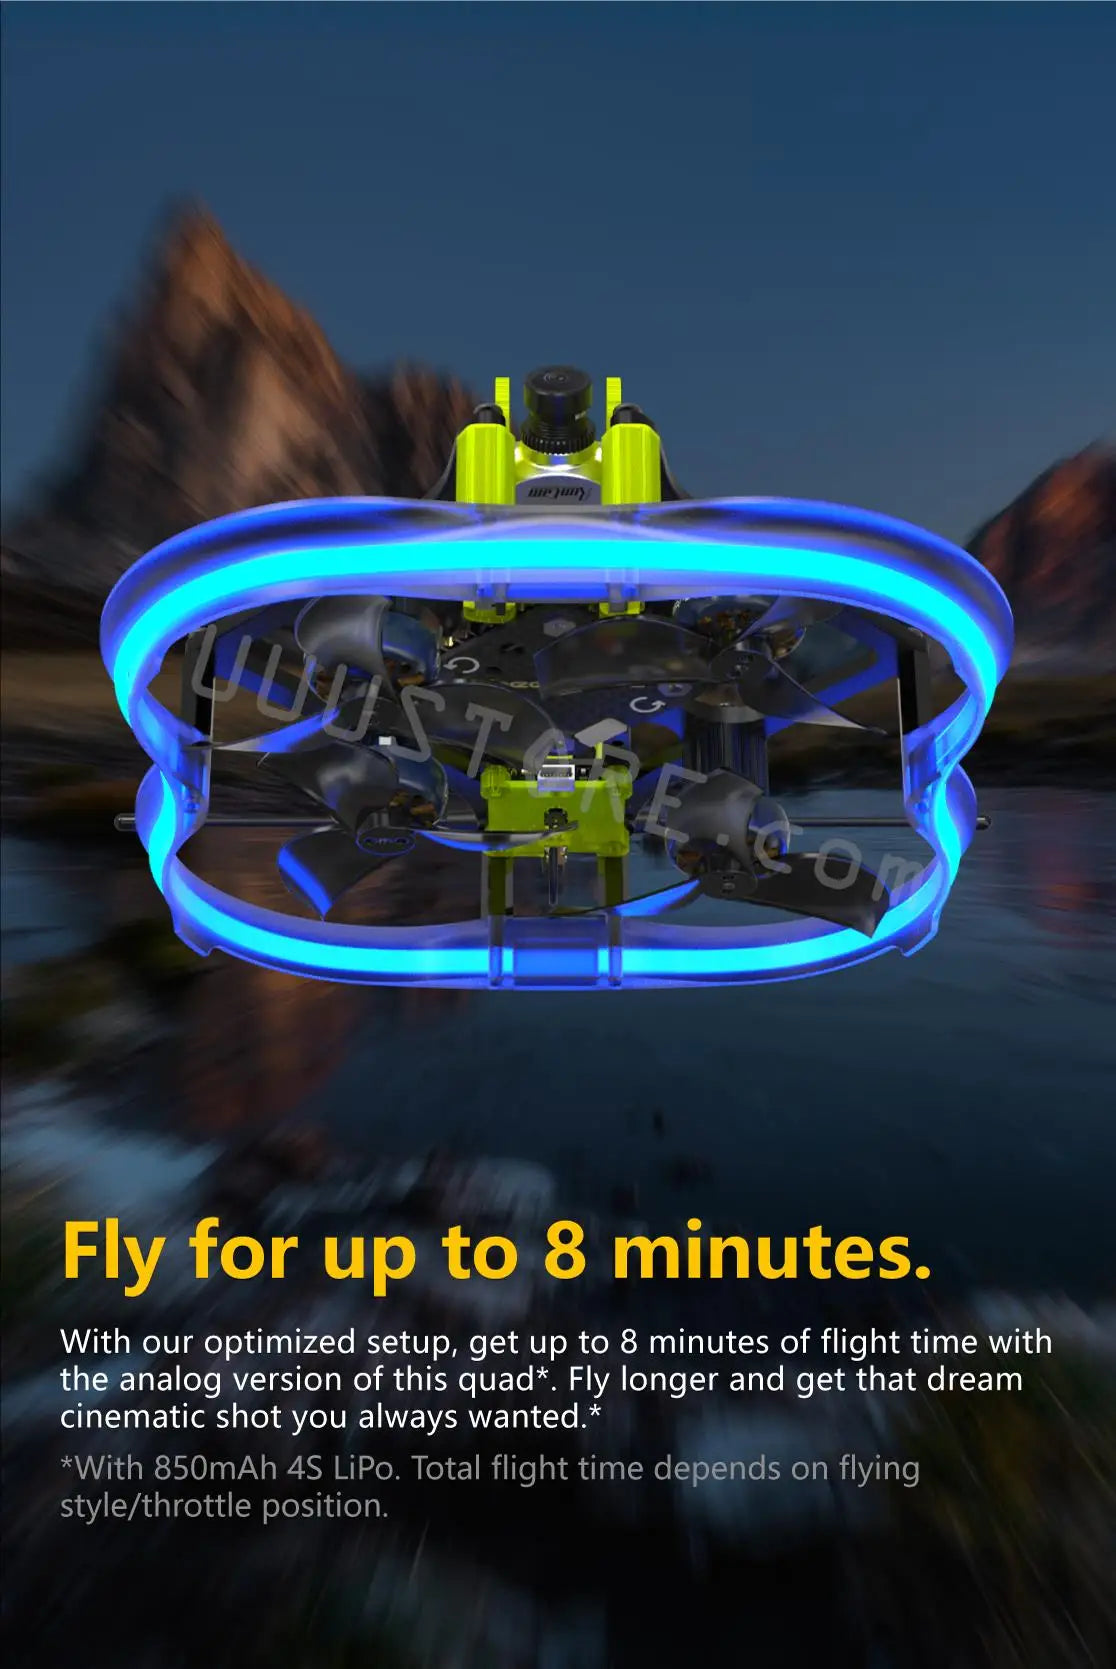 SpeedyBee Flex25 Analog, 850mAh 4S LiPo: Total flight time depends on flying style/throttle